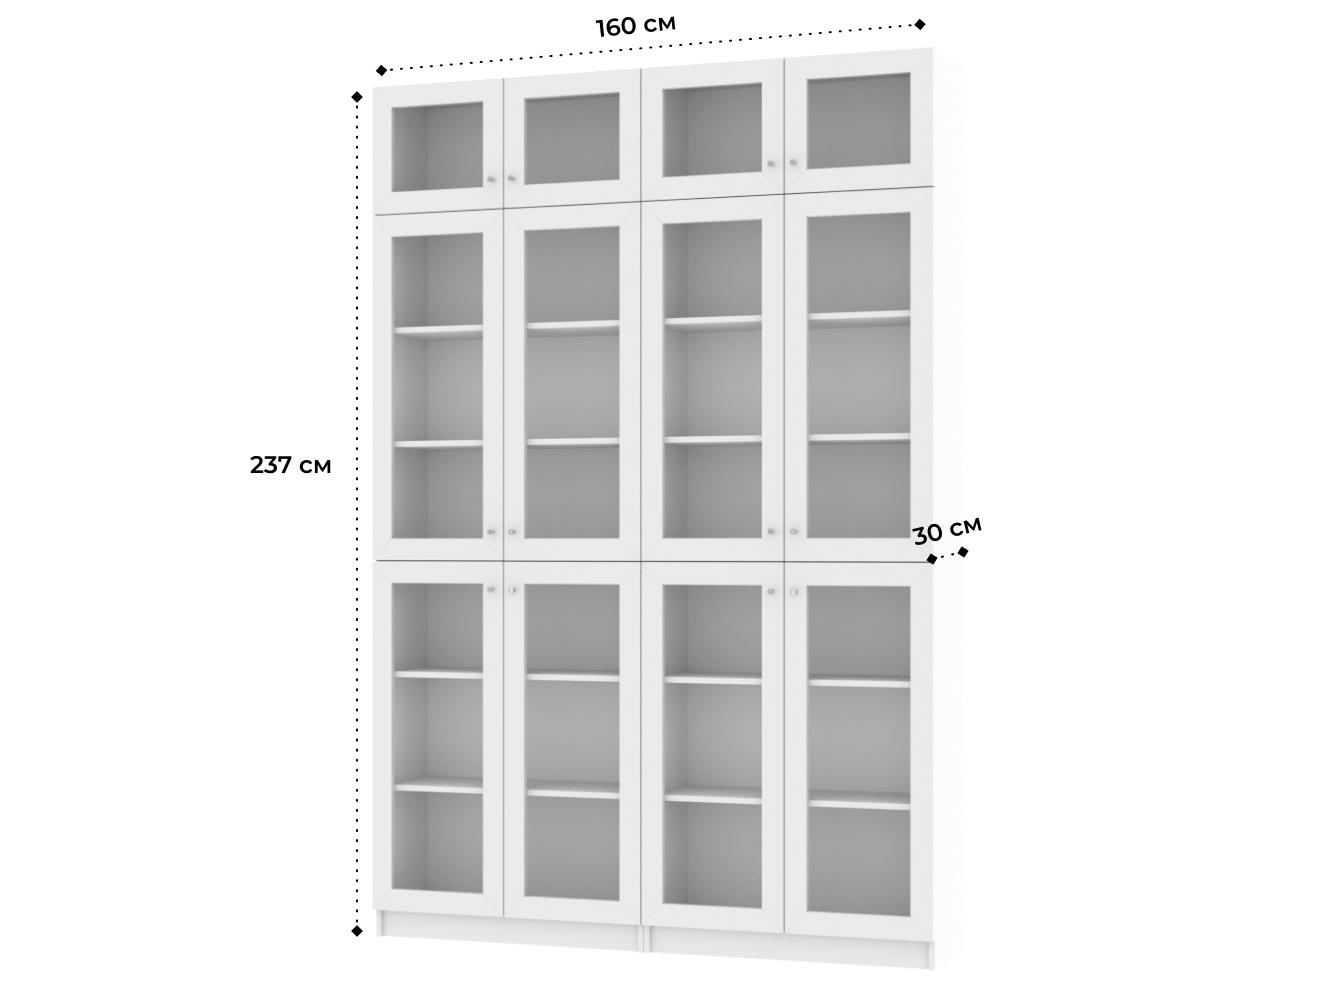  Книжный шкаф Билли 37 white ИКЕА (IKEA) изображение товара